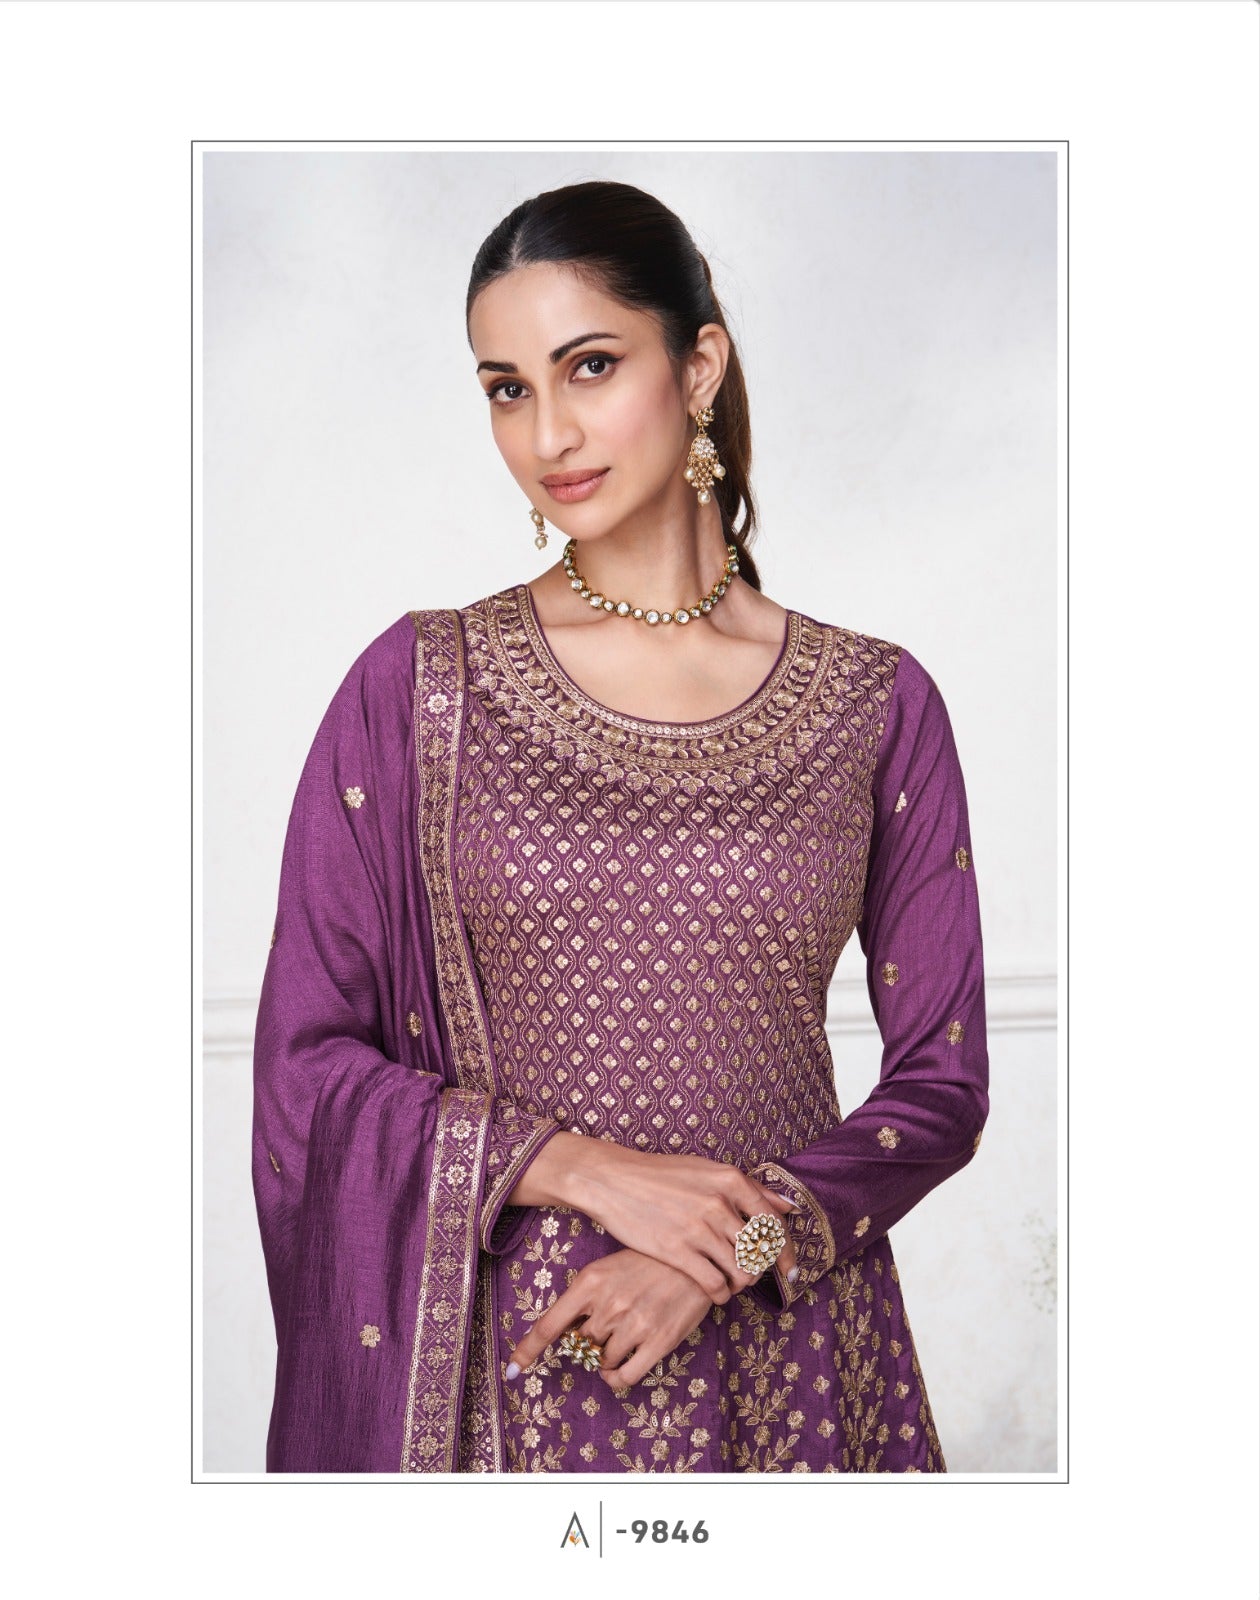 Sargam-Nx Aashirwad Creation Premium Silk Readymade Suits